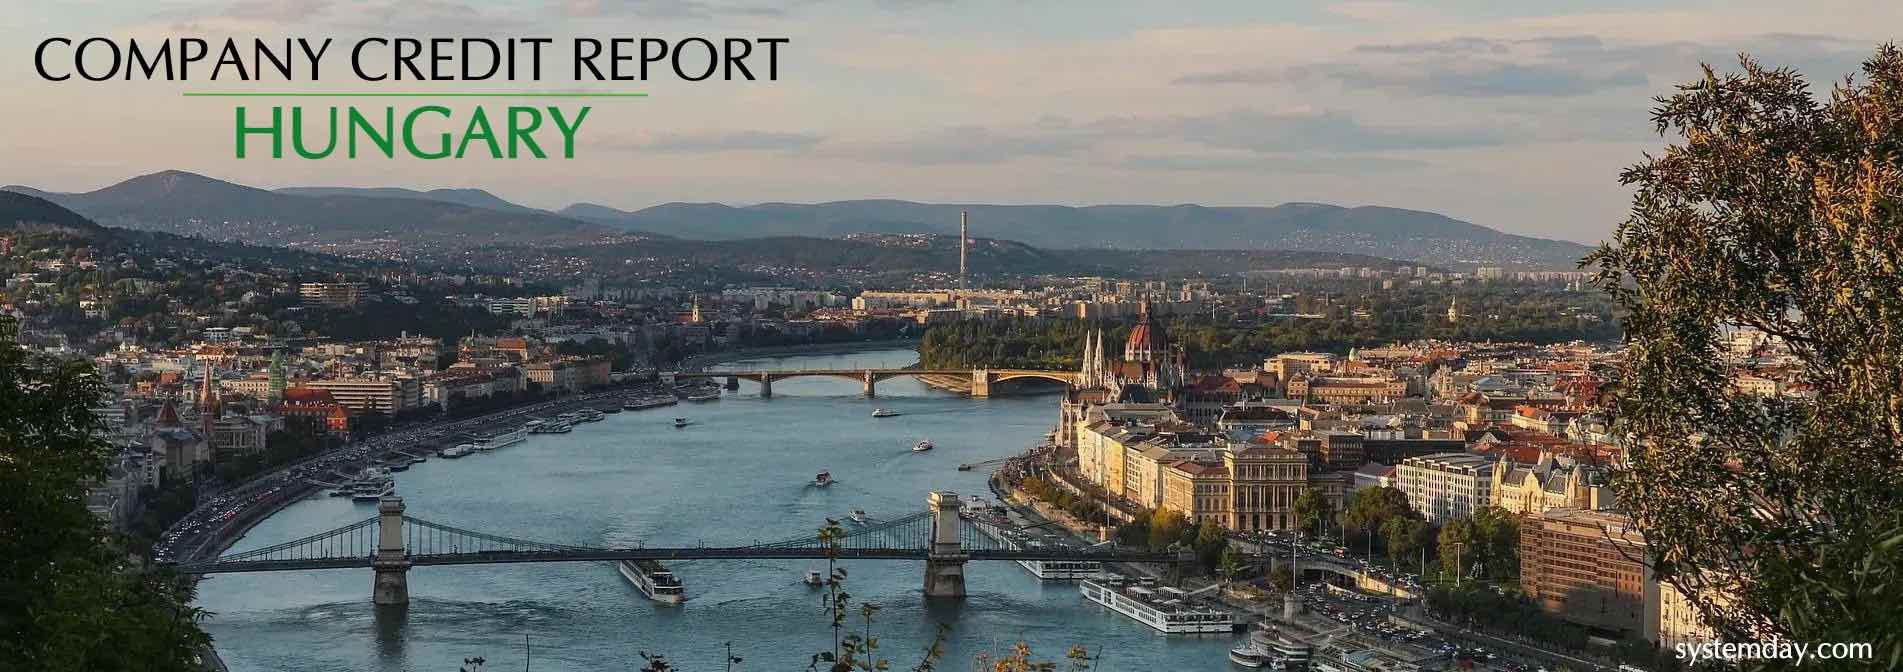 Hungary Company Credit Report